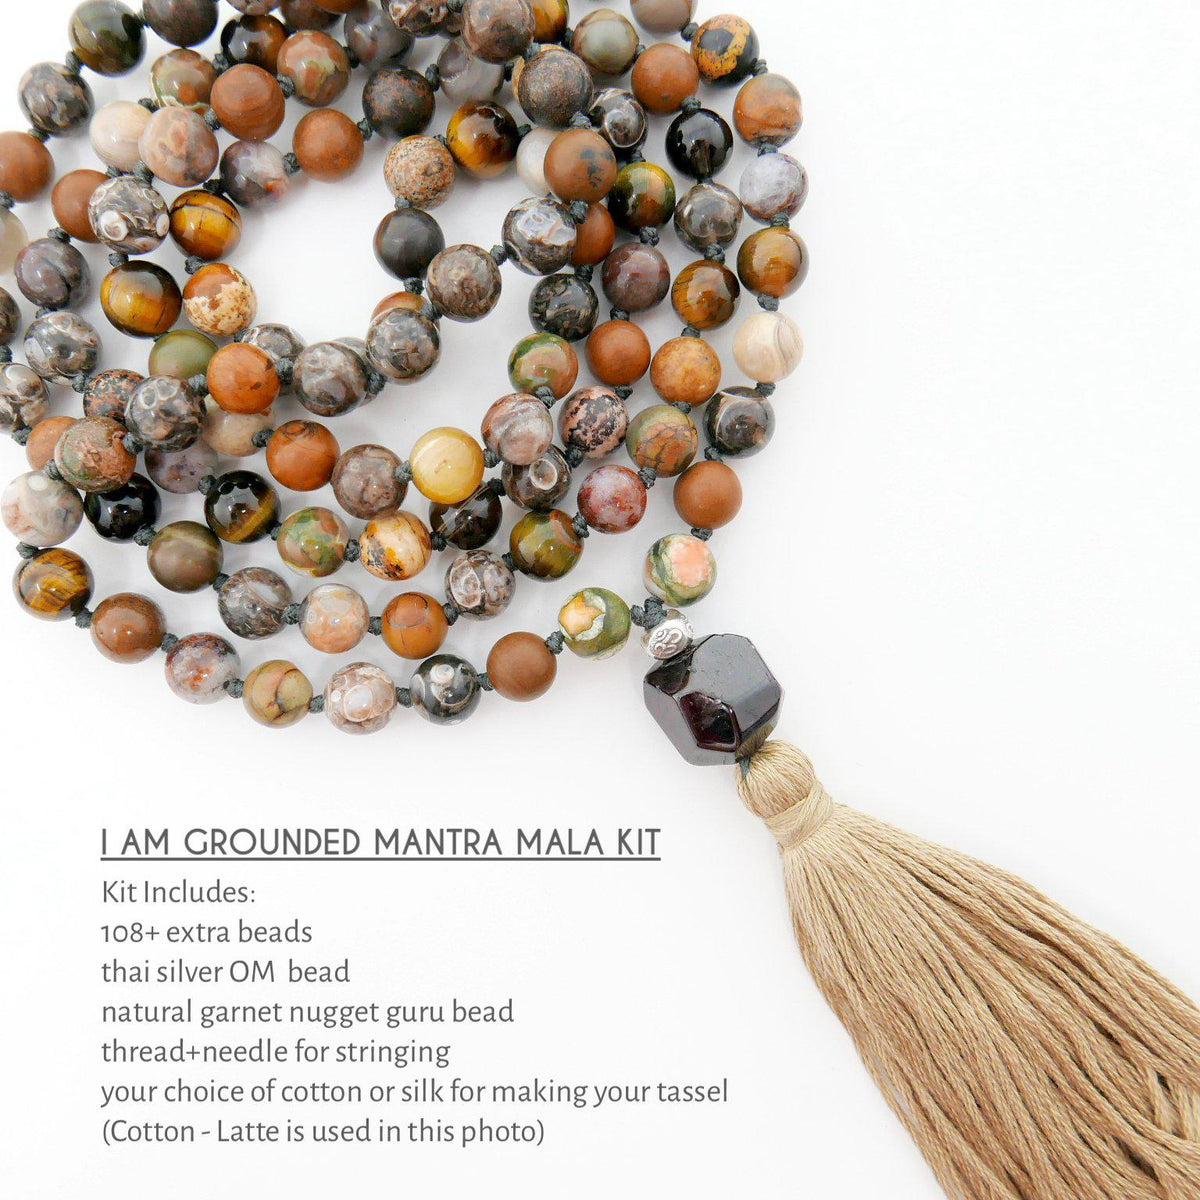 SALE! I AM GROUNDED Mantra Mala Kit-Mala Kit-MeraKalpa Malas